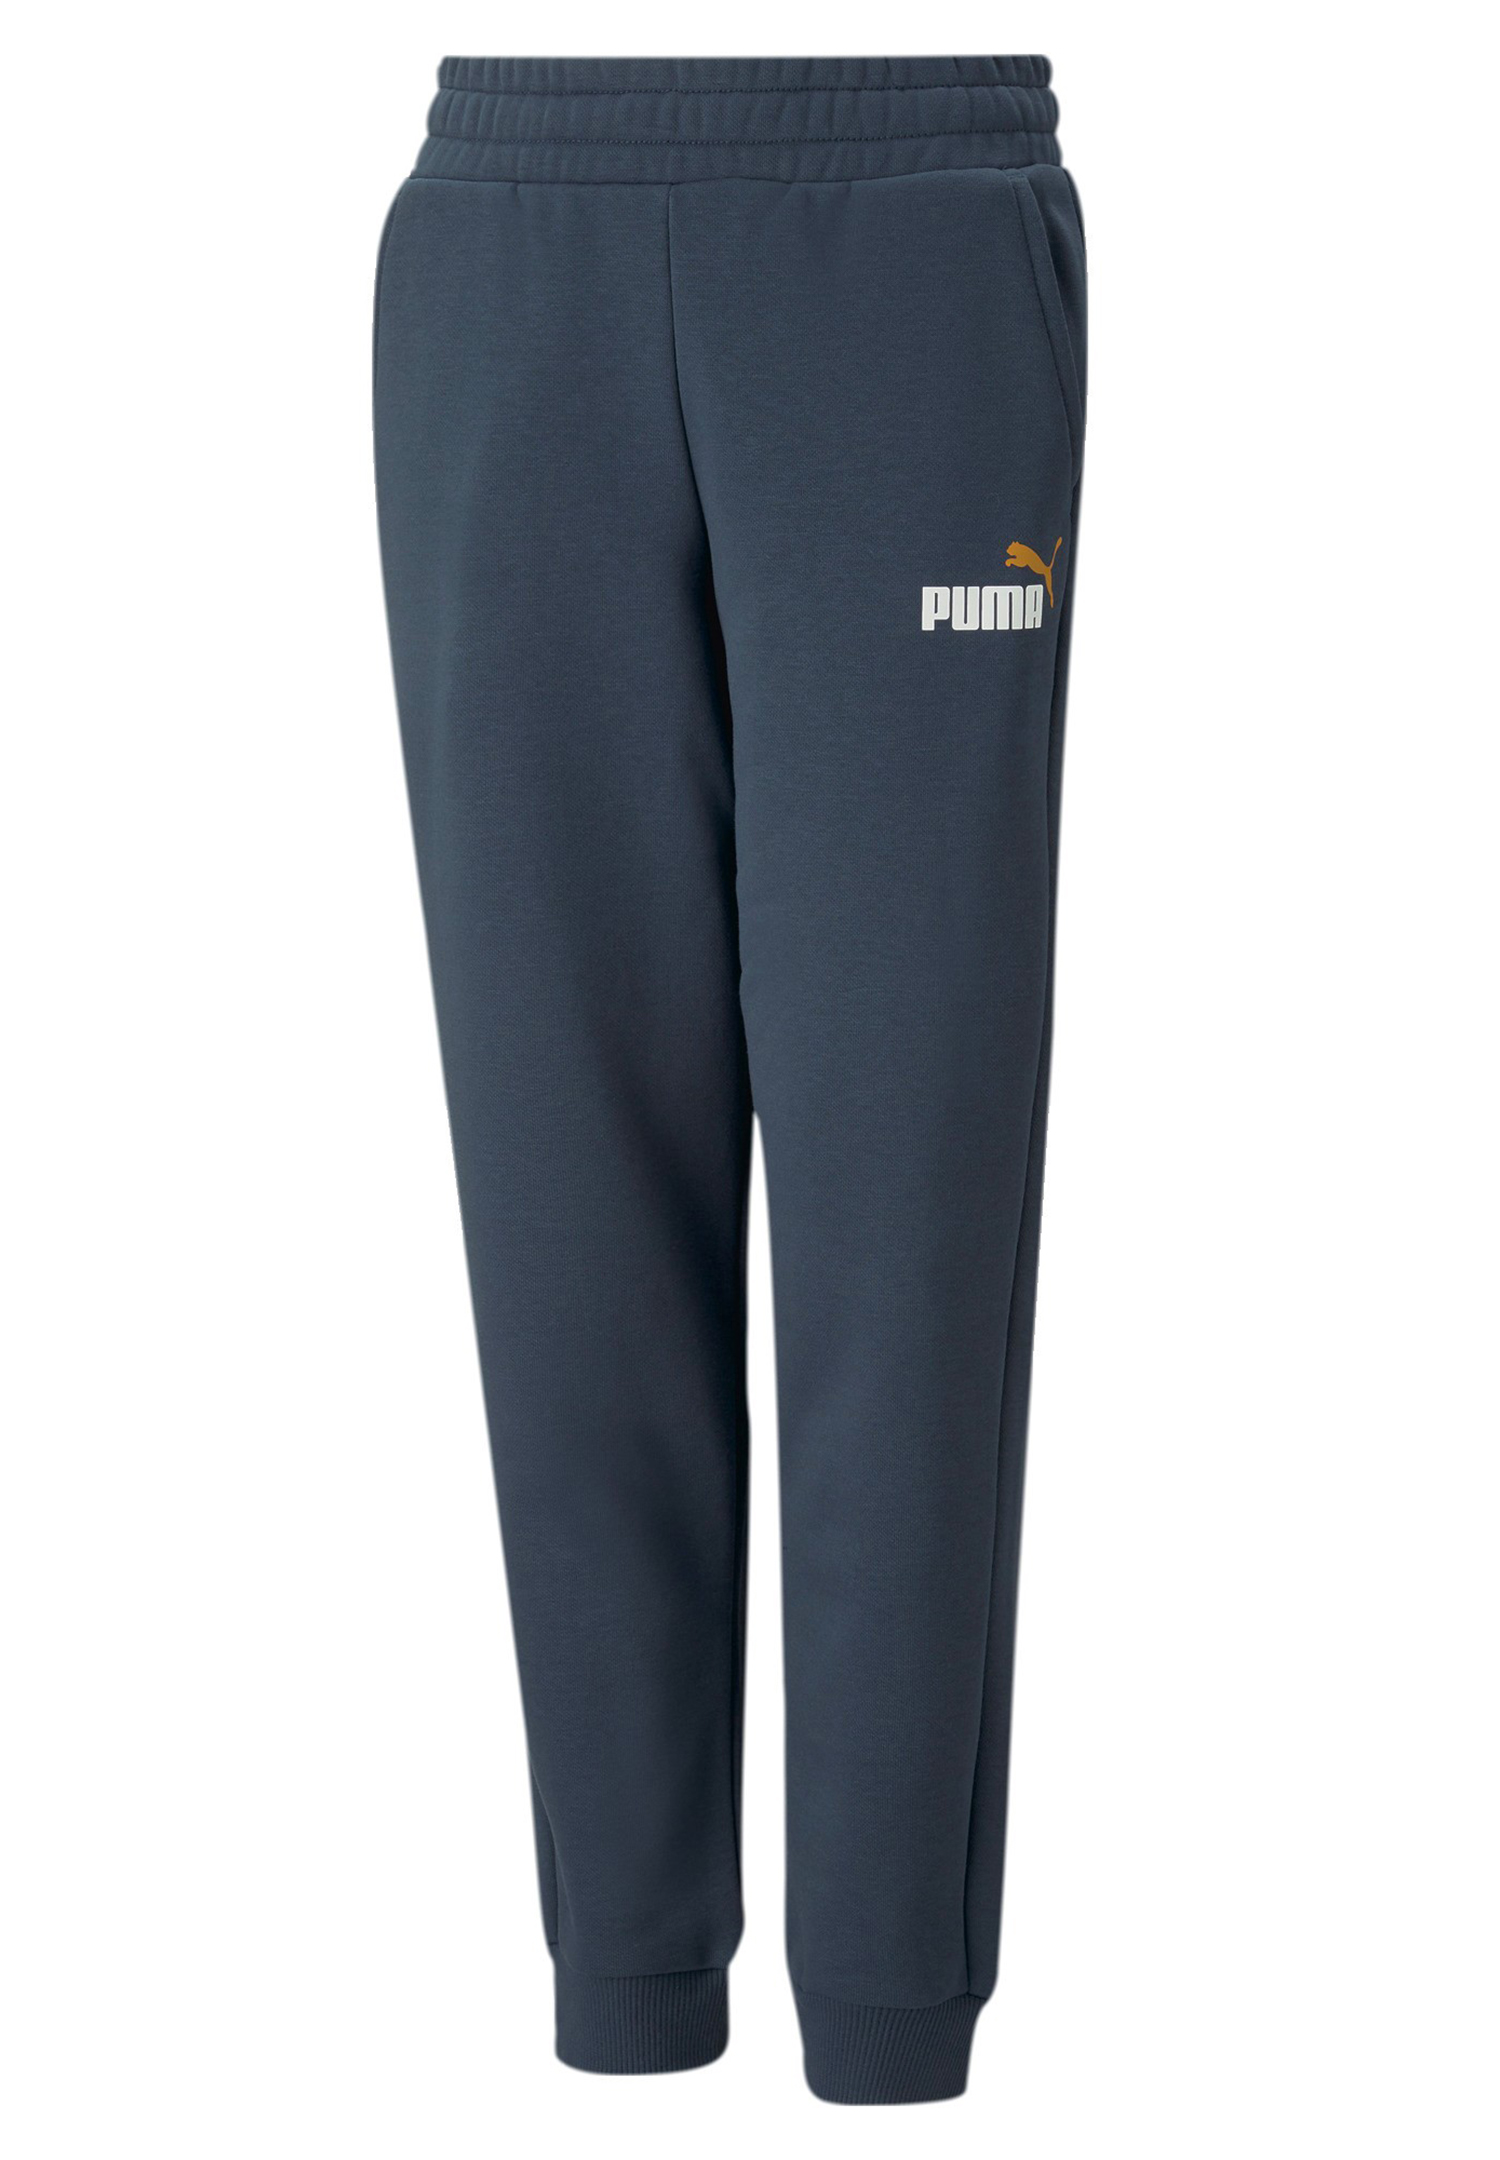 PUMA Ess+ 2 Col Logo Pants FL CL Kinder Sweathose Jogginghose 586988 16 blau von Puma